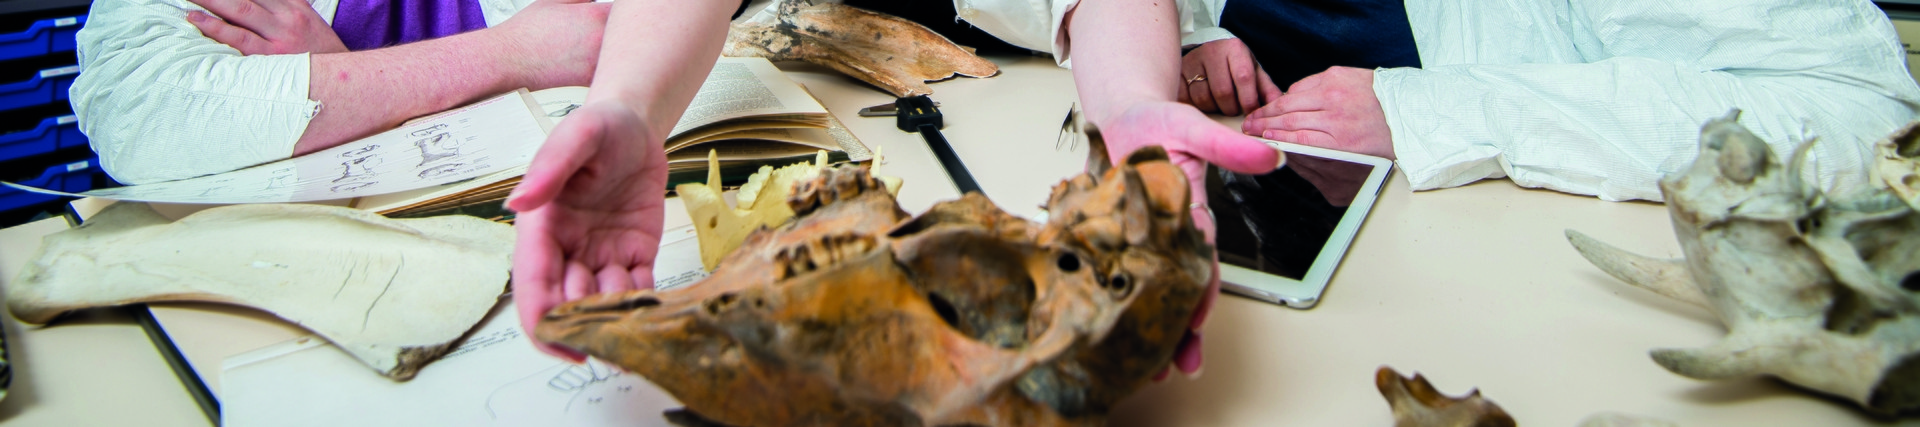 Humanities students studying an animal skull